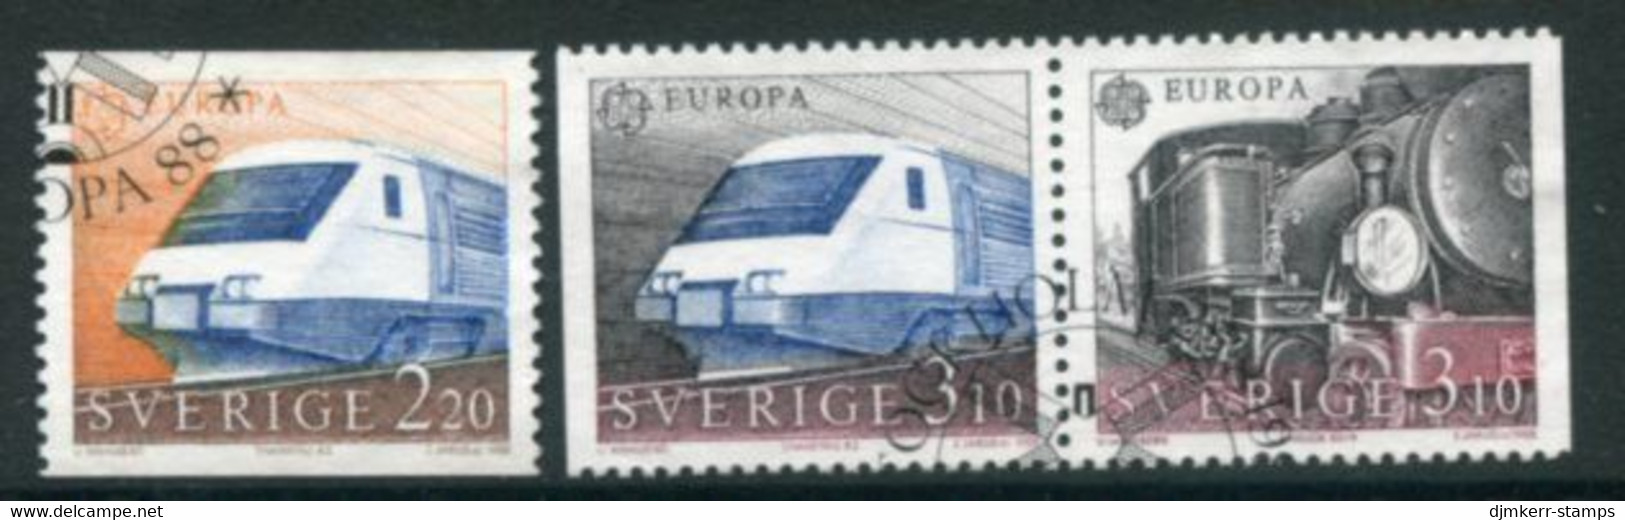 SWEDEN 1988 Europa: Transport. Used.  Michel 1501-03 - Usati